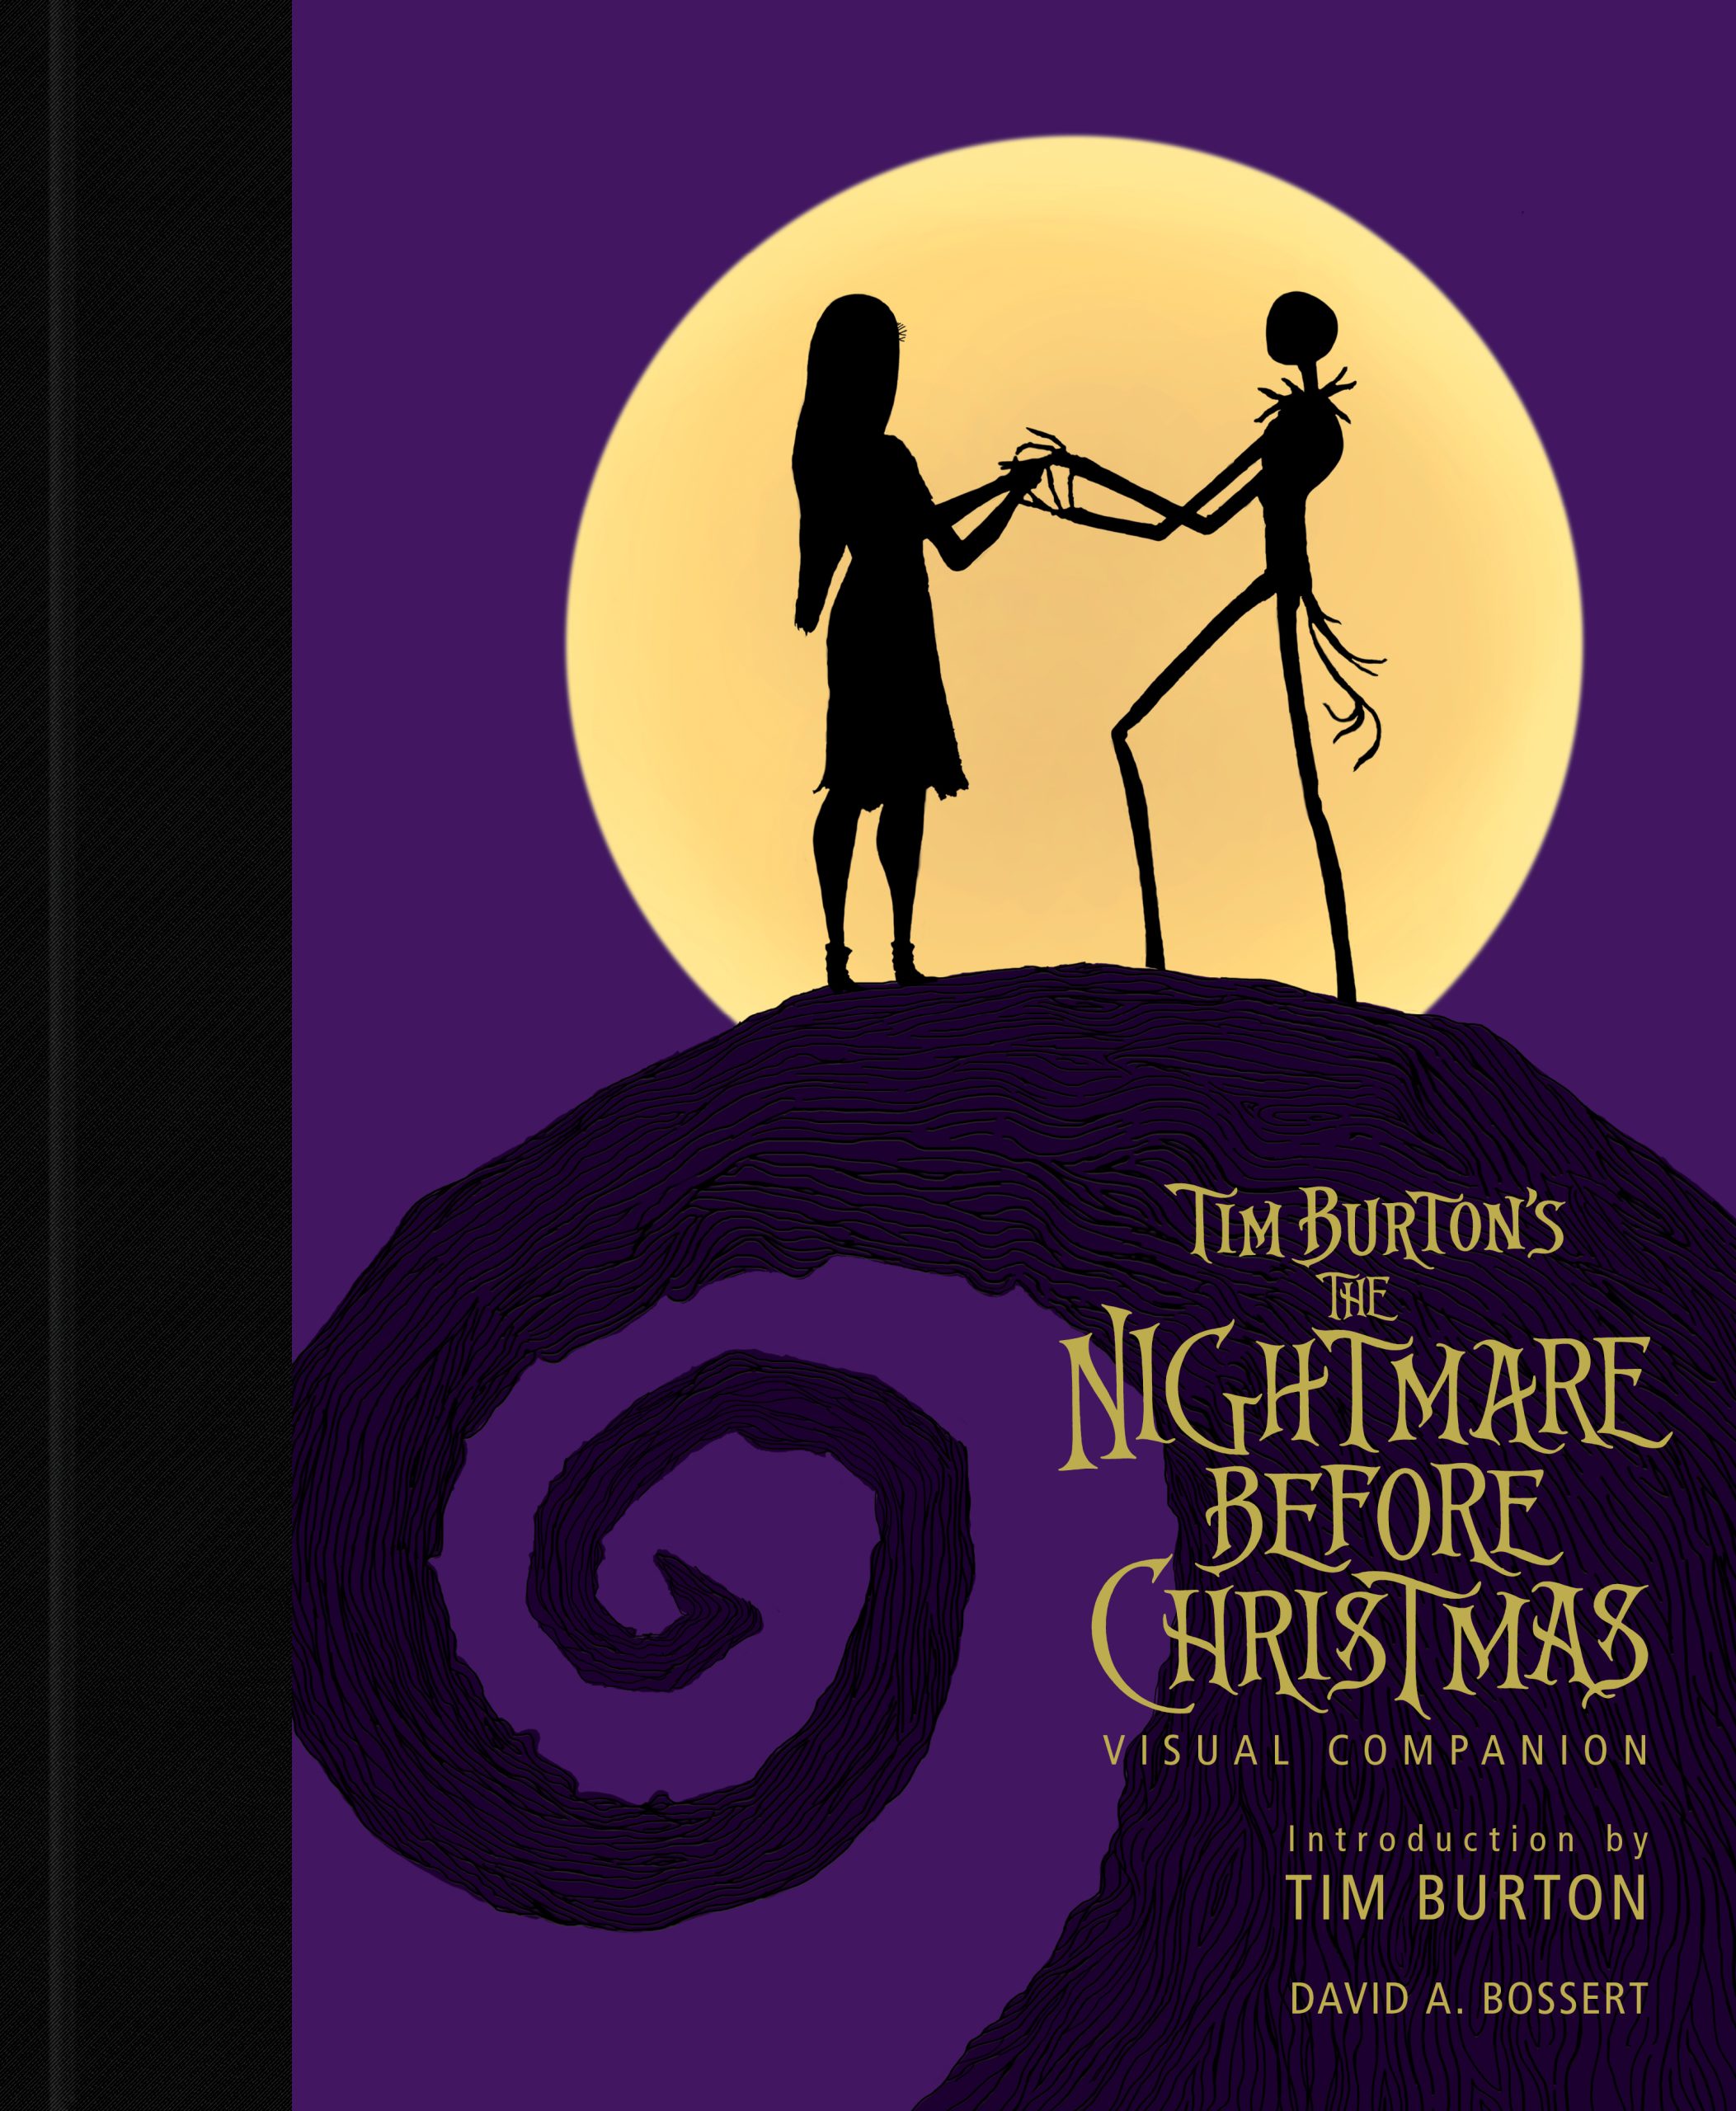 Tim Burton's The Nightmare Before Christmas Visual Companion by